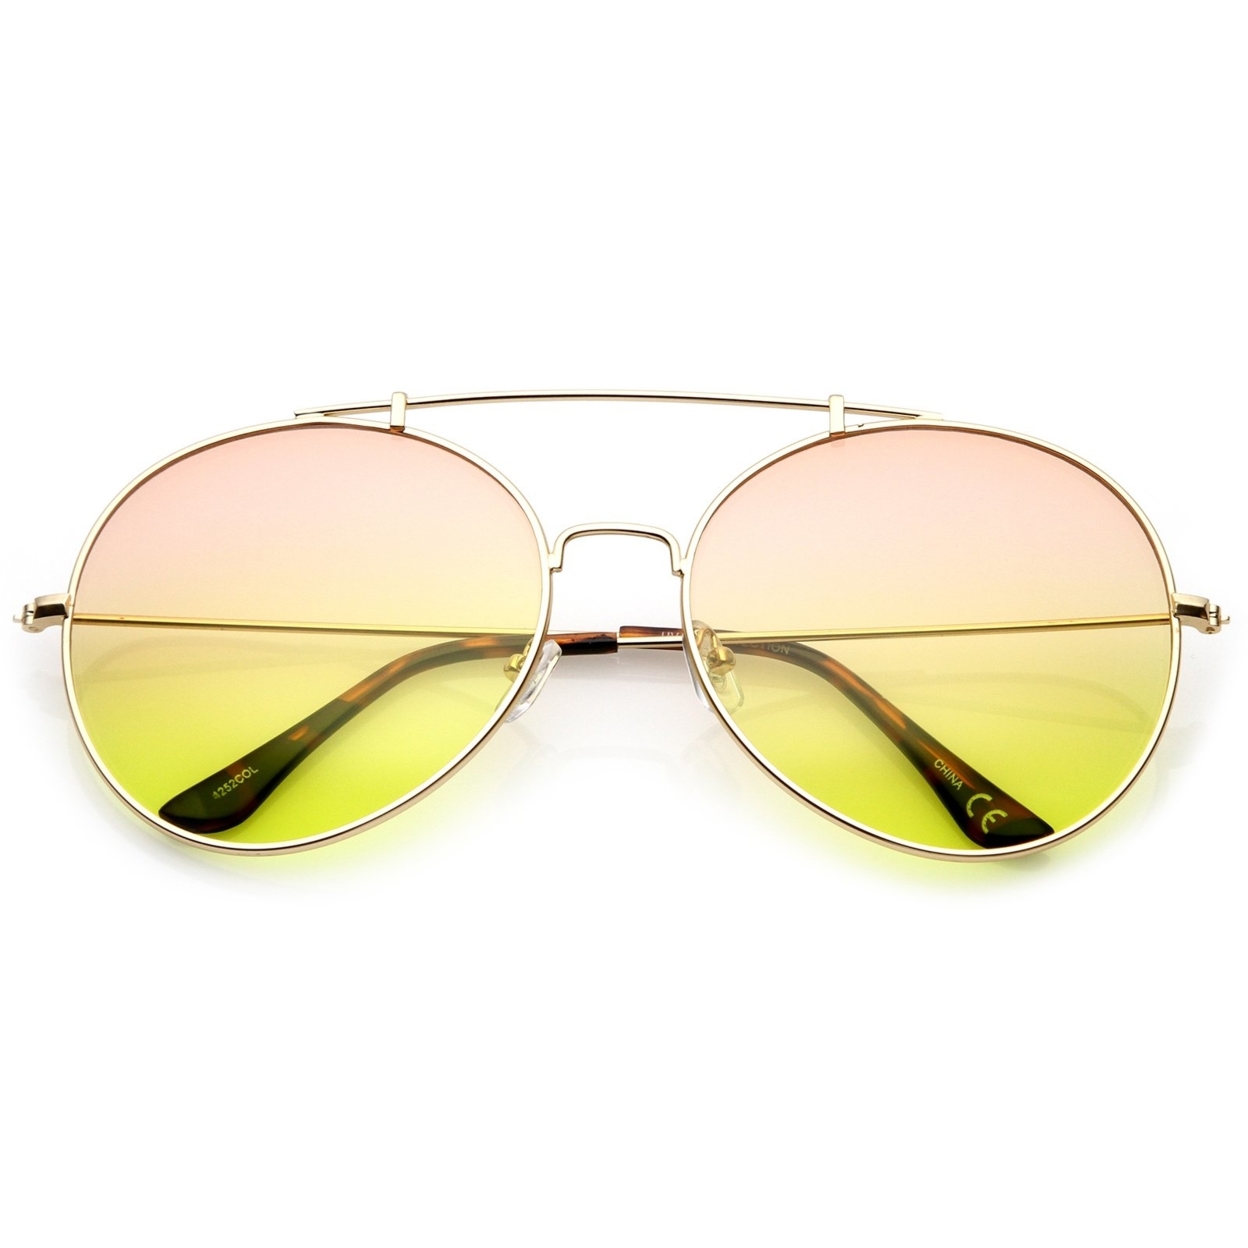 Oversize Metal Double Nose Bridge Slim Arms Gradient Round Lens Aviator Sunglasses 64mm - Gold / Pink-Purple